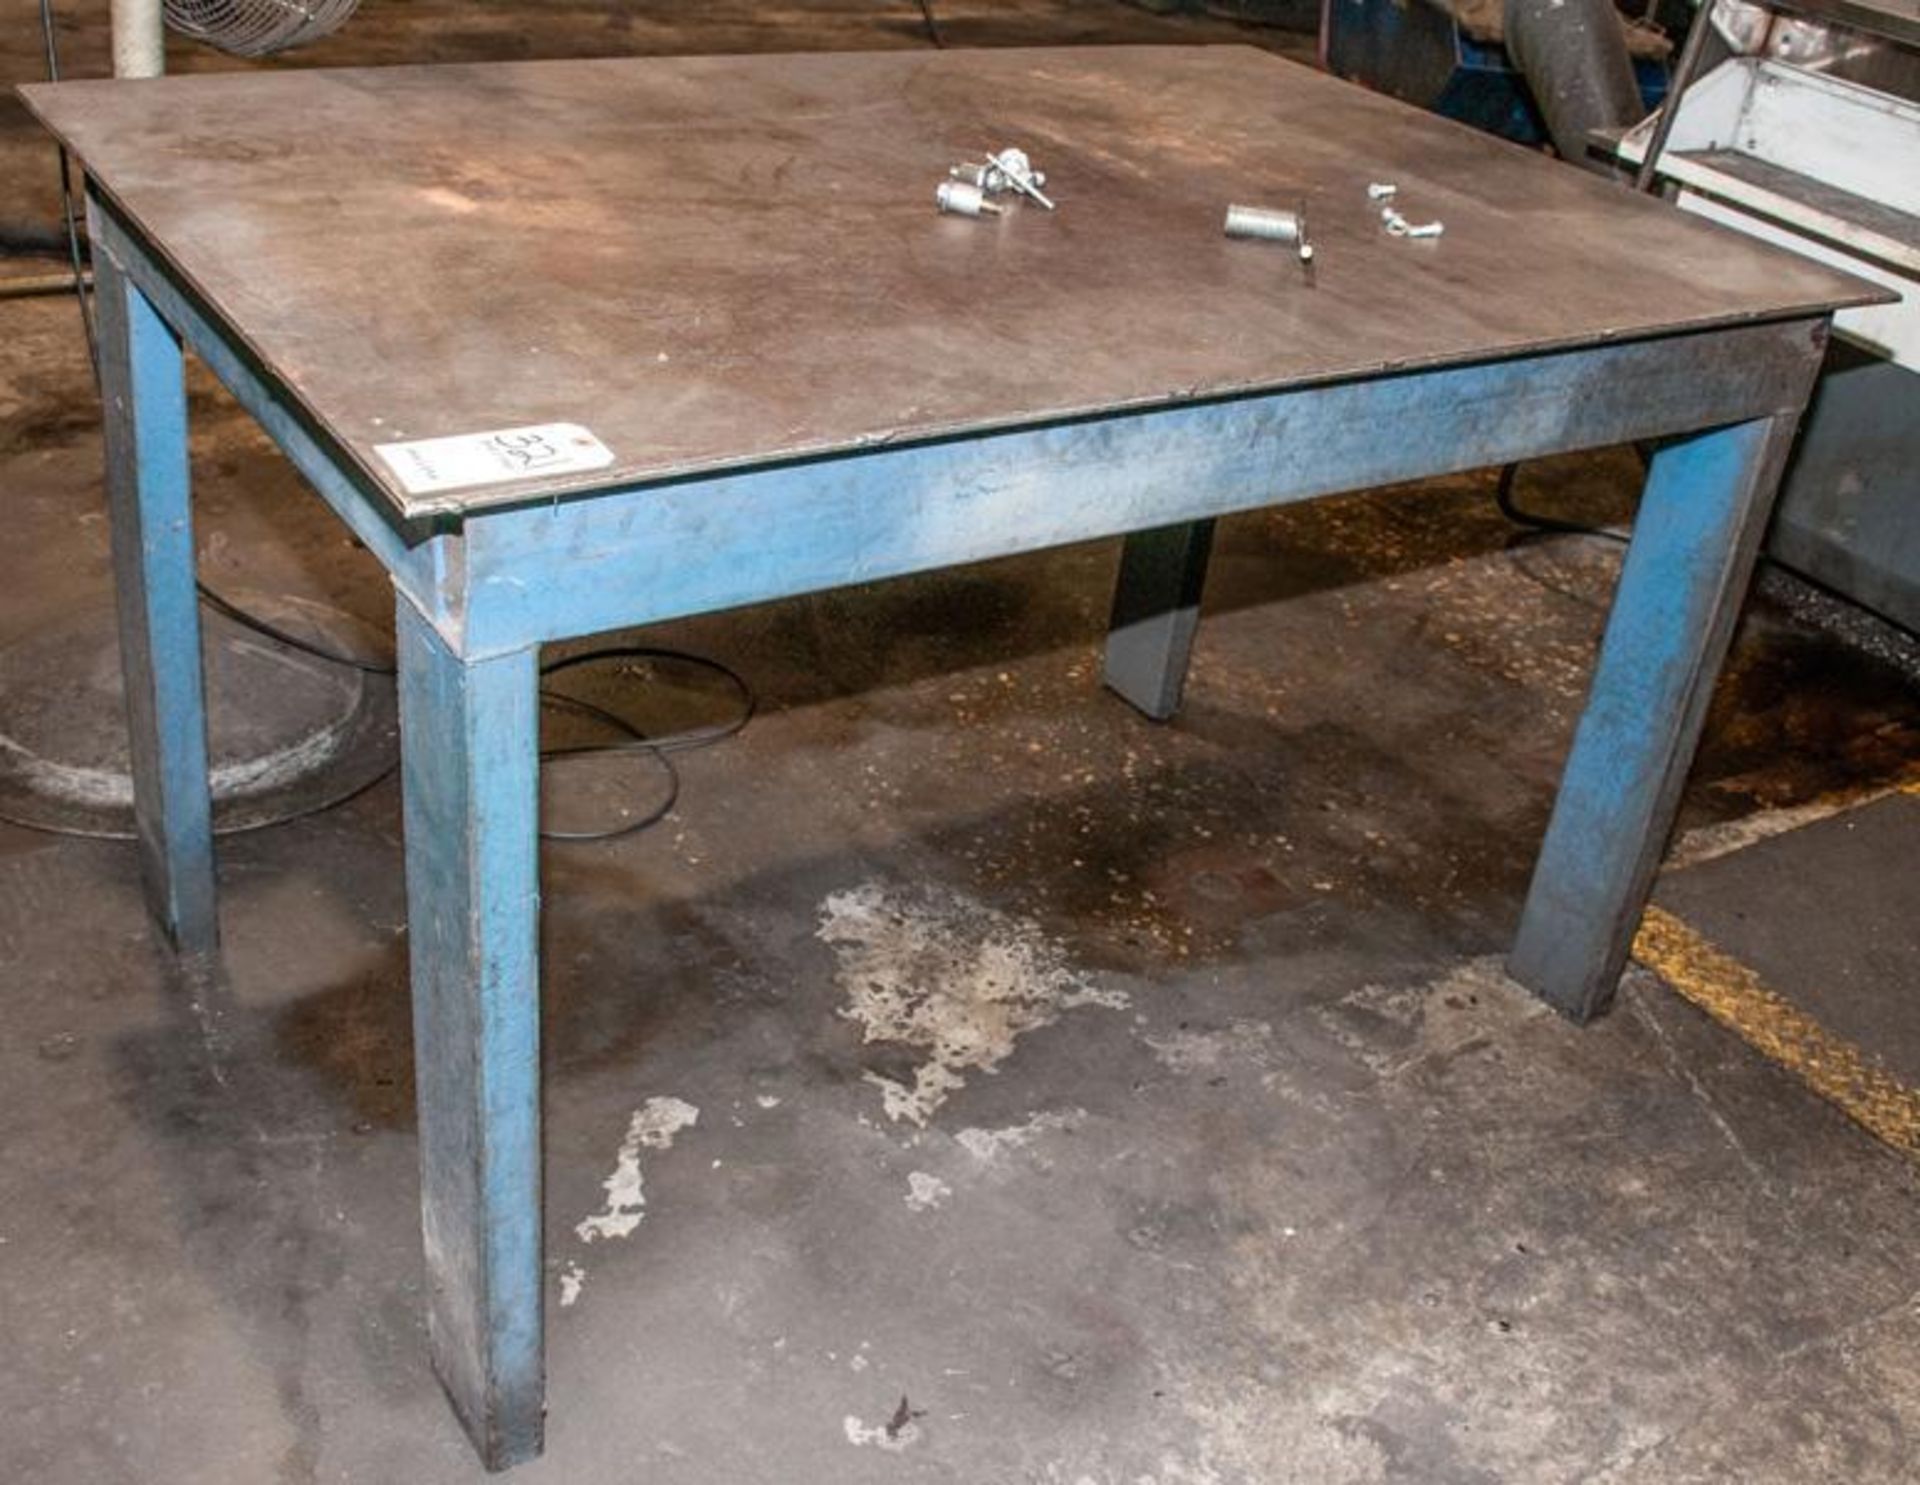 Steel table approx. 60" x 39" x 35 1/2" tall